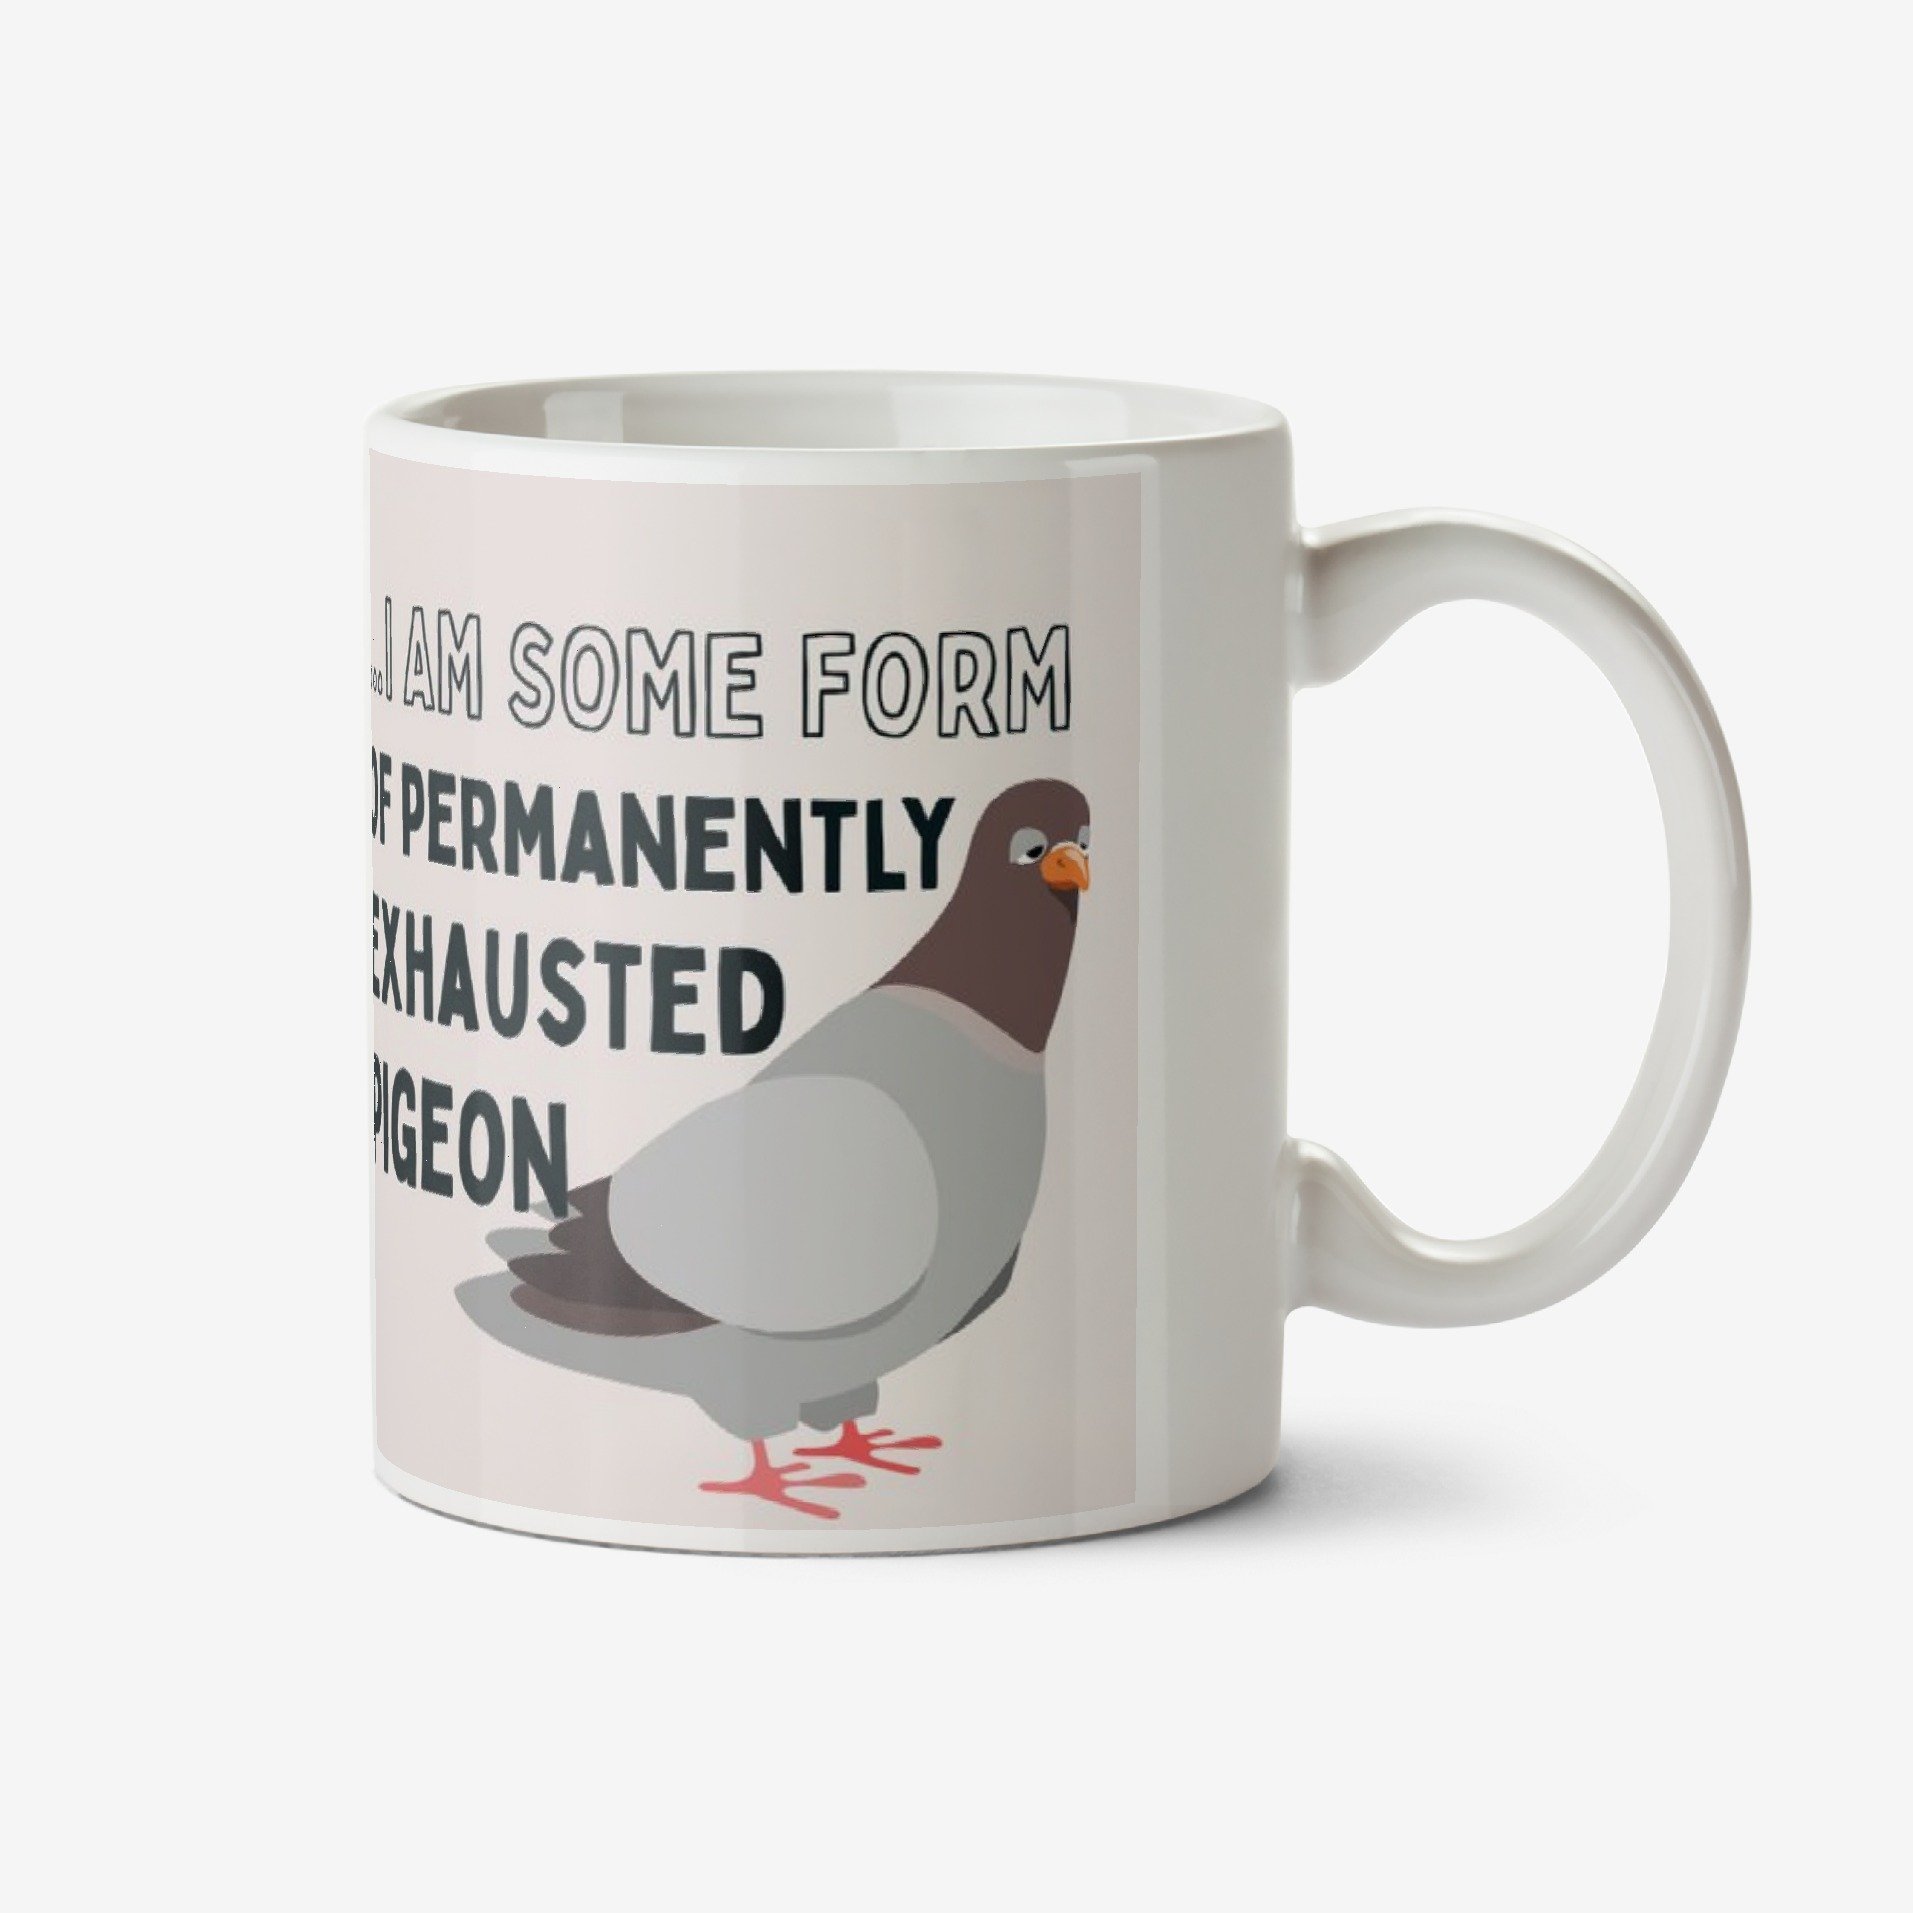 Moonpig Permanently Exhausted Pigeon Mug Ceramic Mug